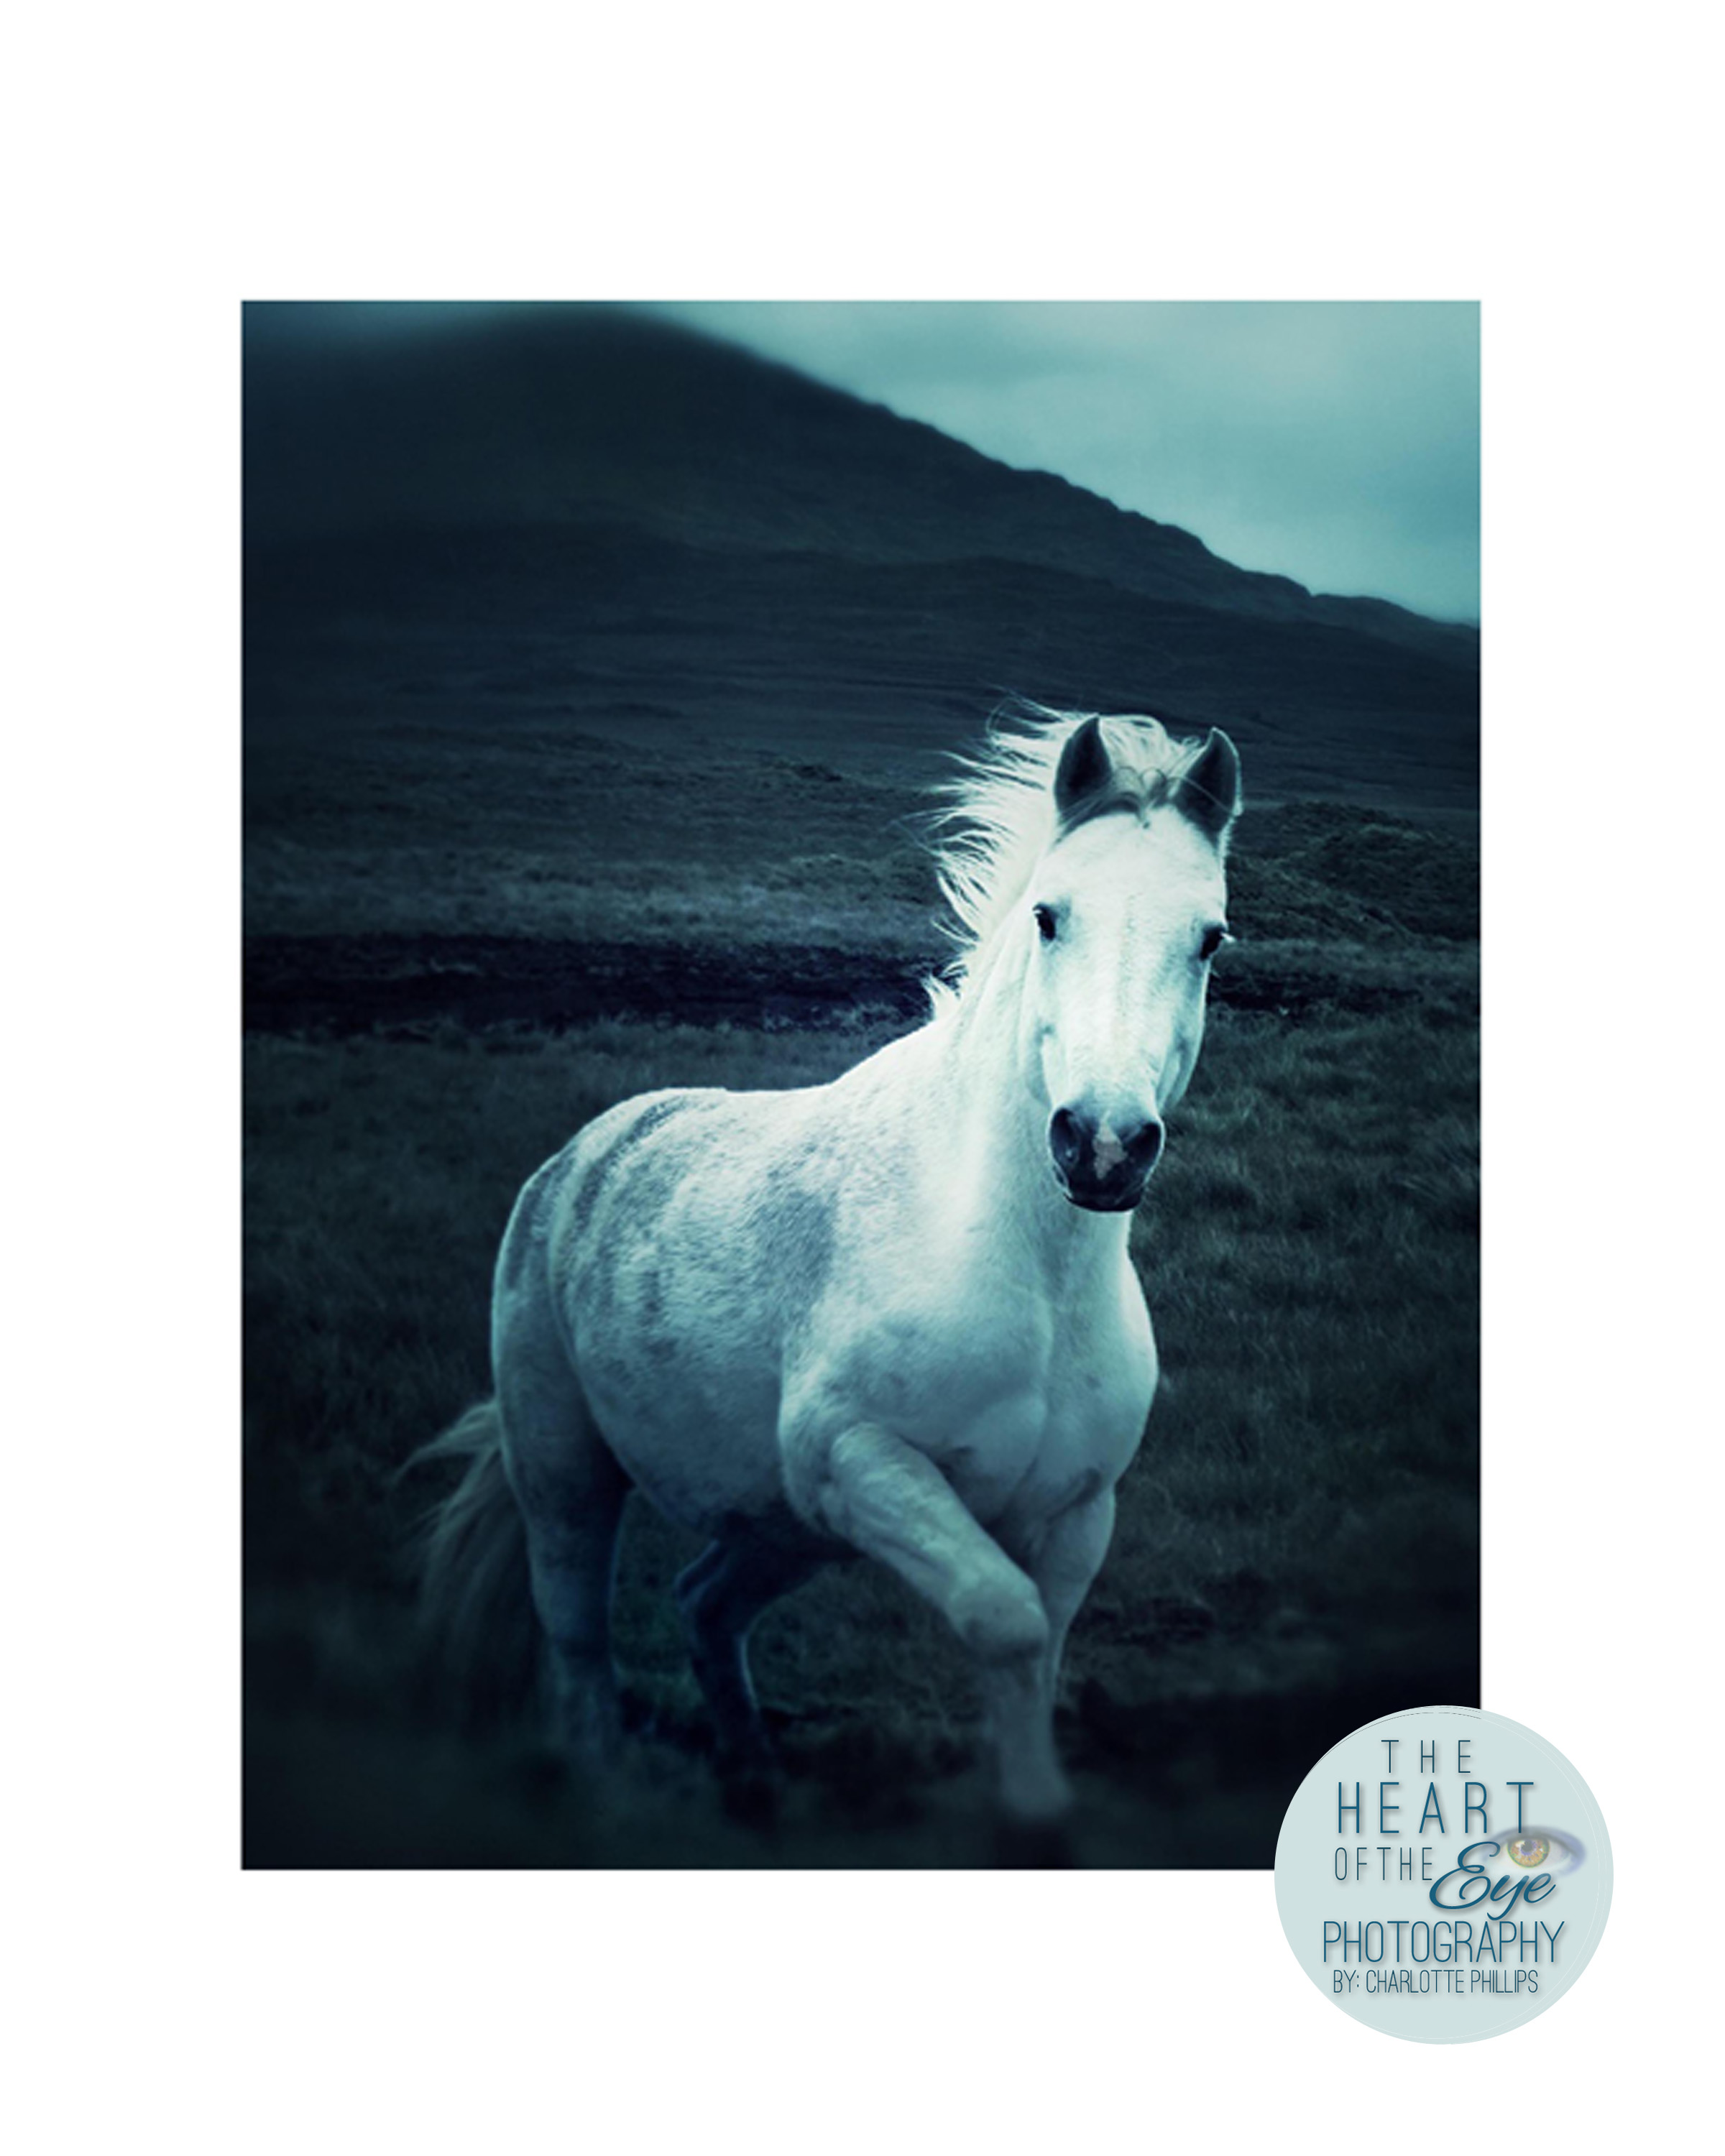 The Wild Horse of Connemara, Ireland